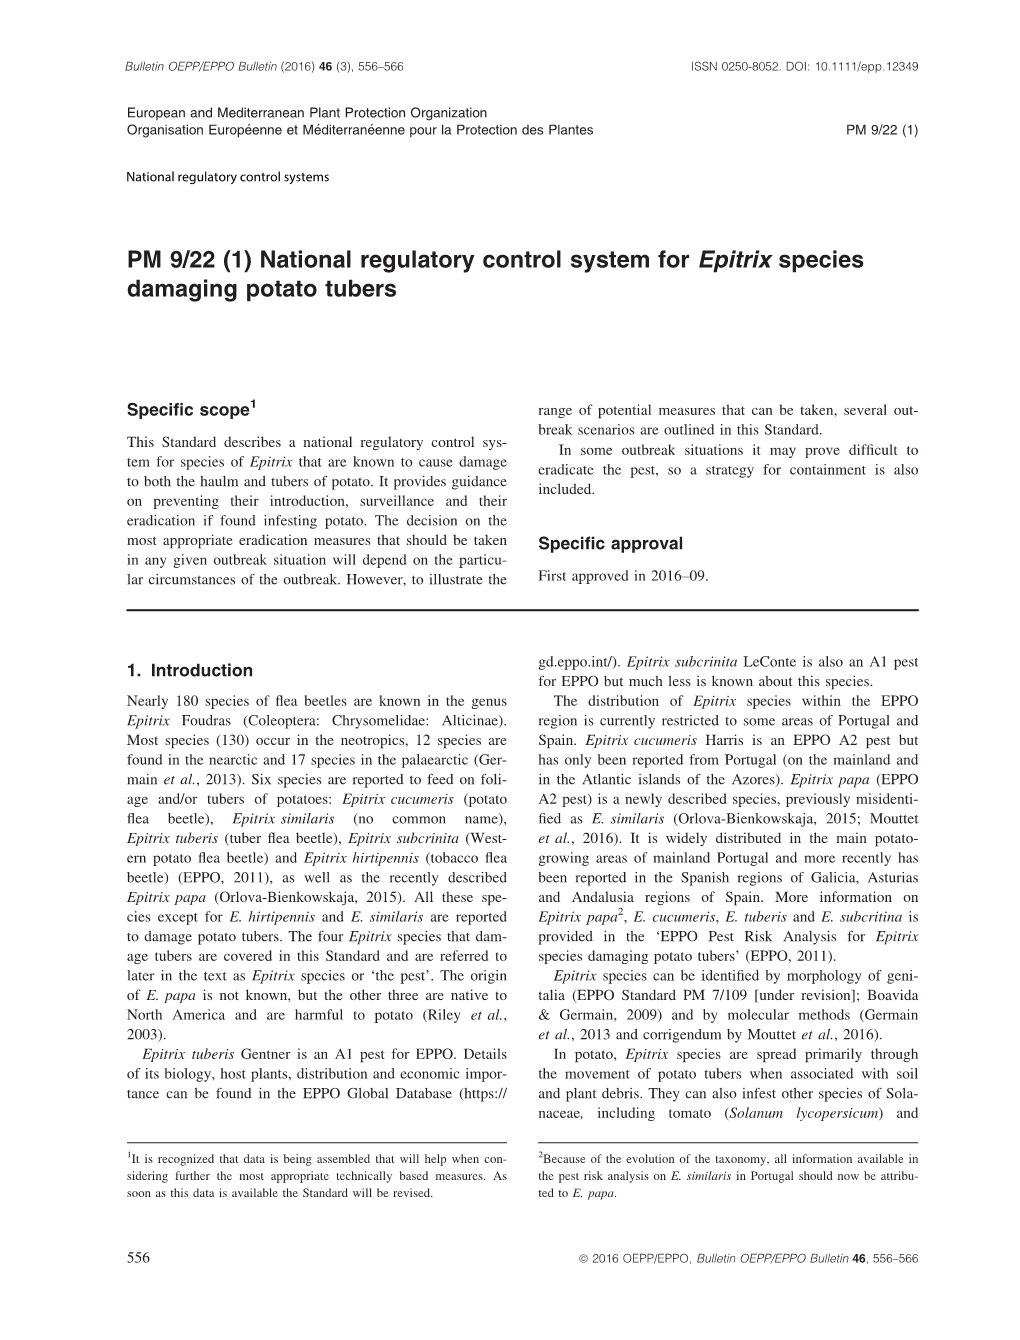 National Regulatory Control System for Epitrix Species Damaging Potato Tubers